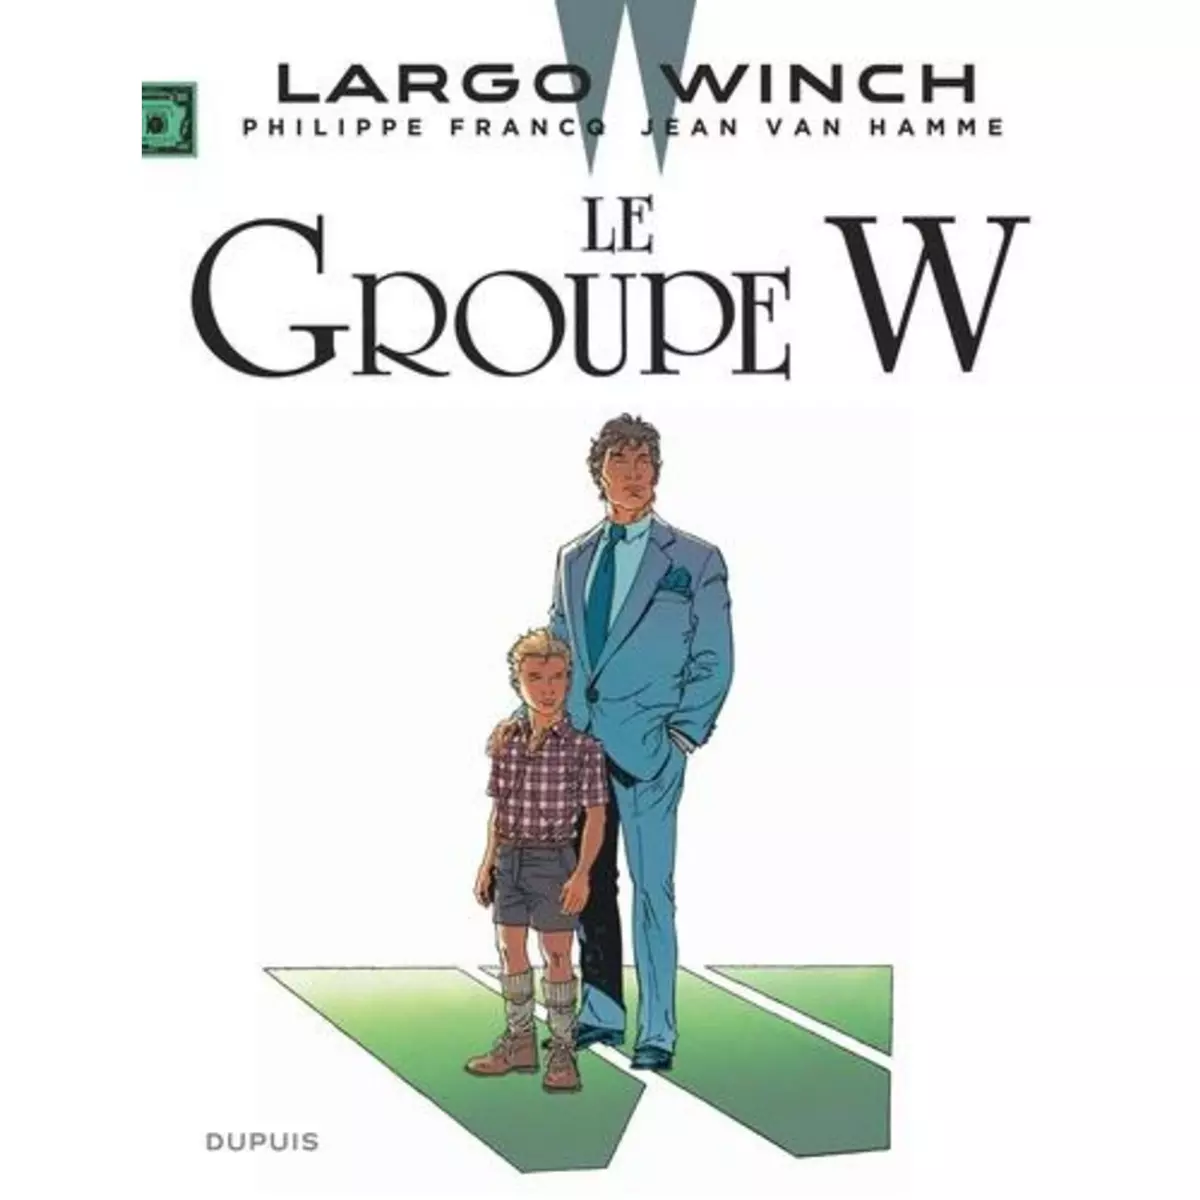  LARGO WINCH TOME 2 : LA GROUPE W, Van Hamme Jean